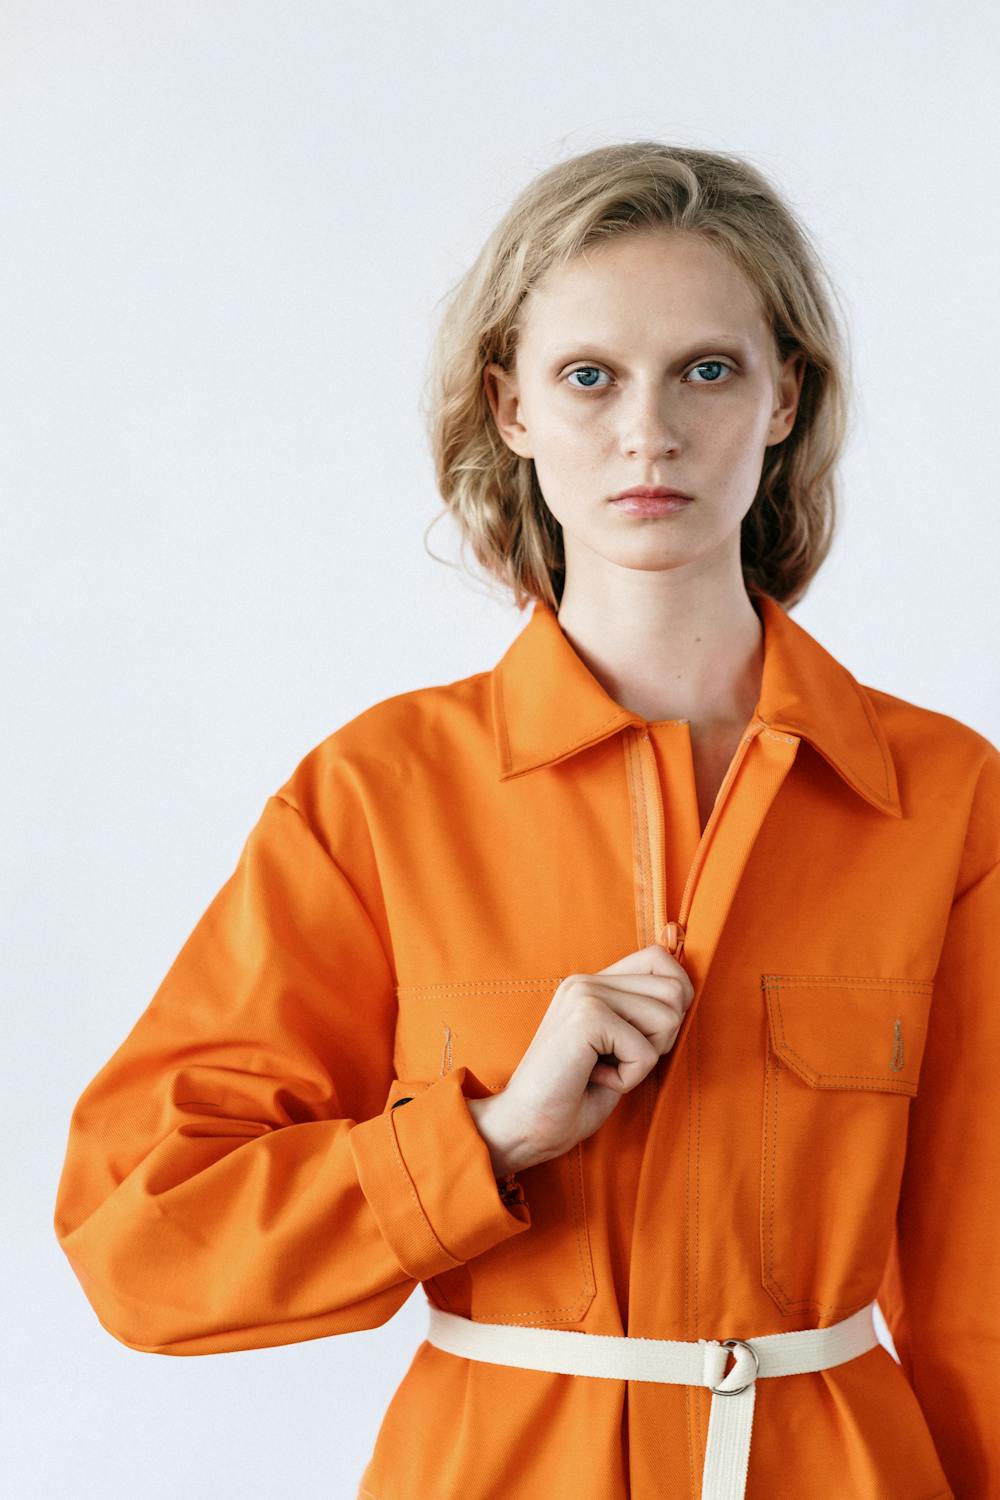 Close-Up Shot of a Blonde Woman Wearing Orange Workwear · Free Stock Photo